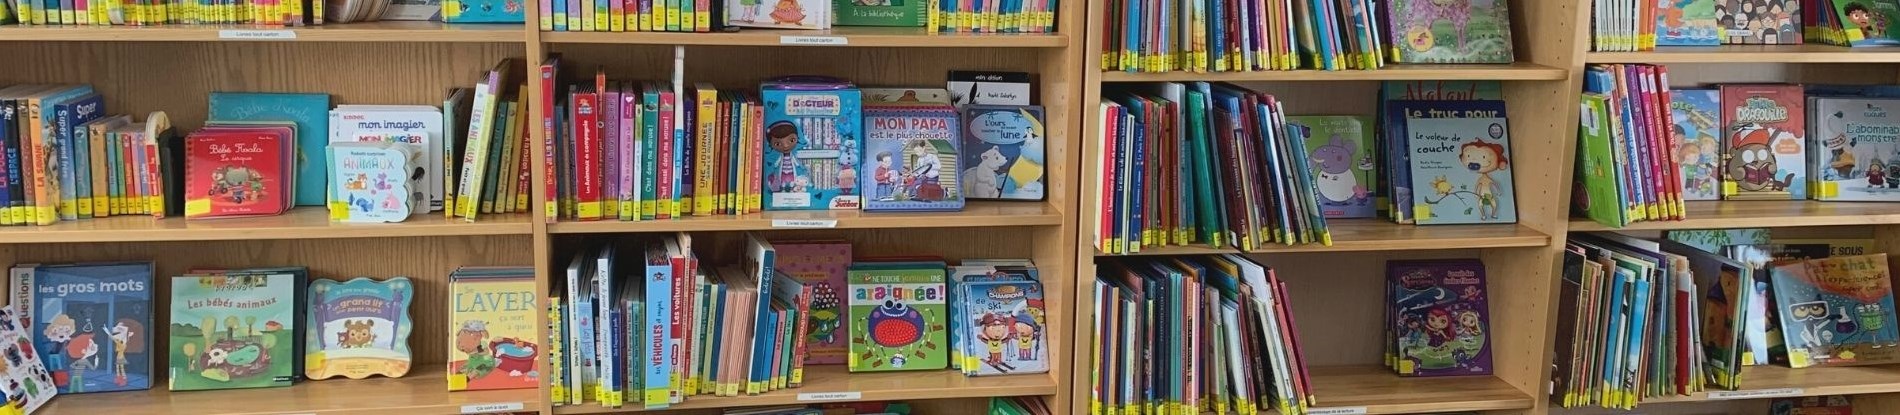 Children books on shelf